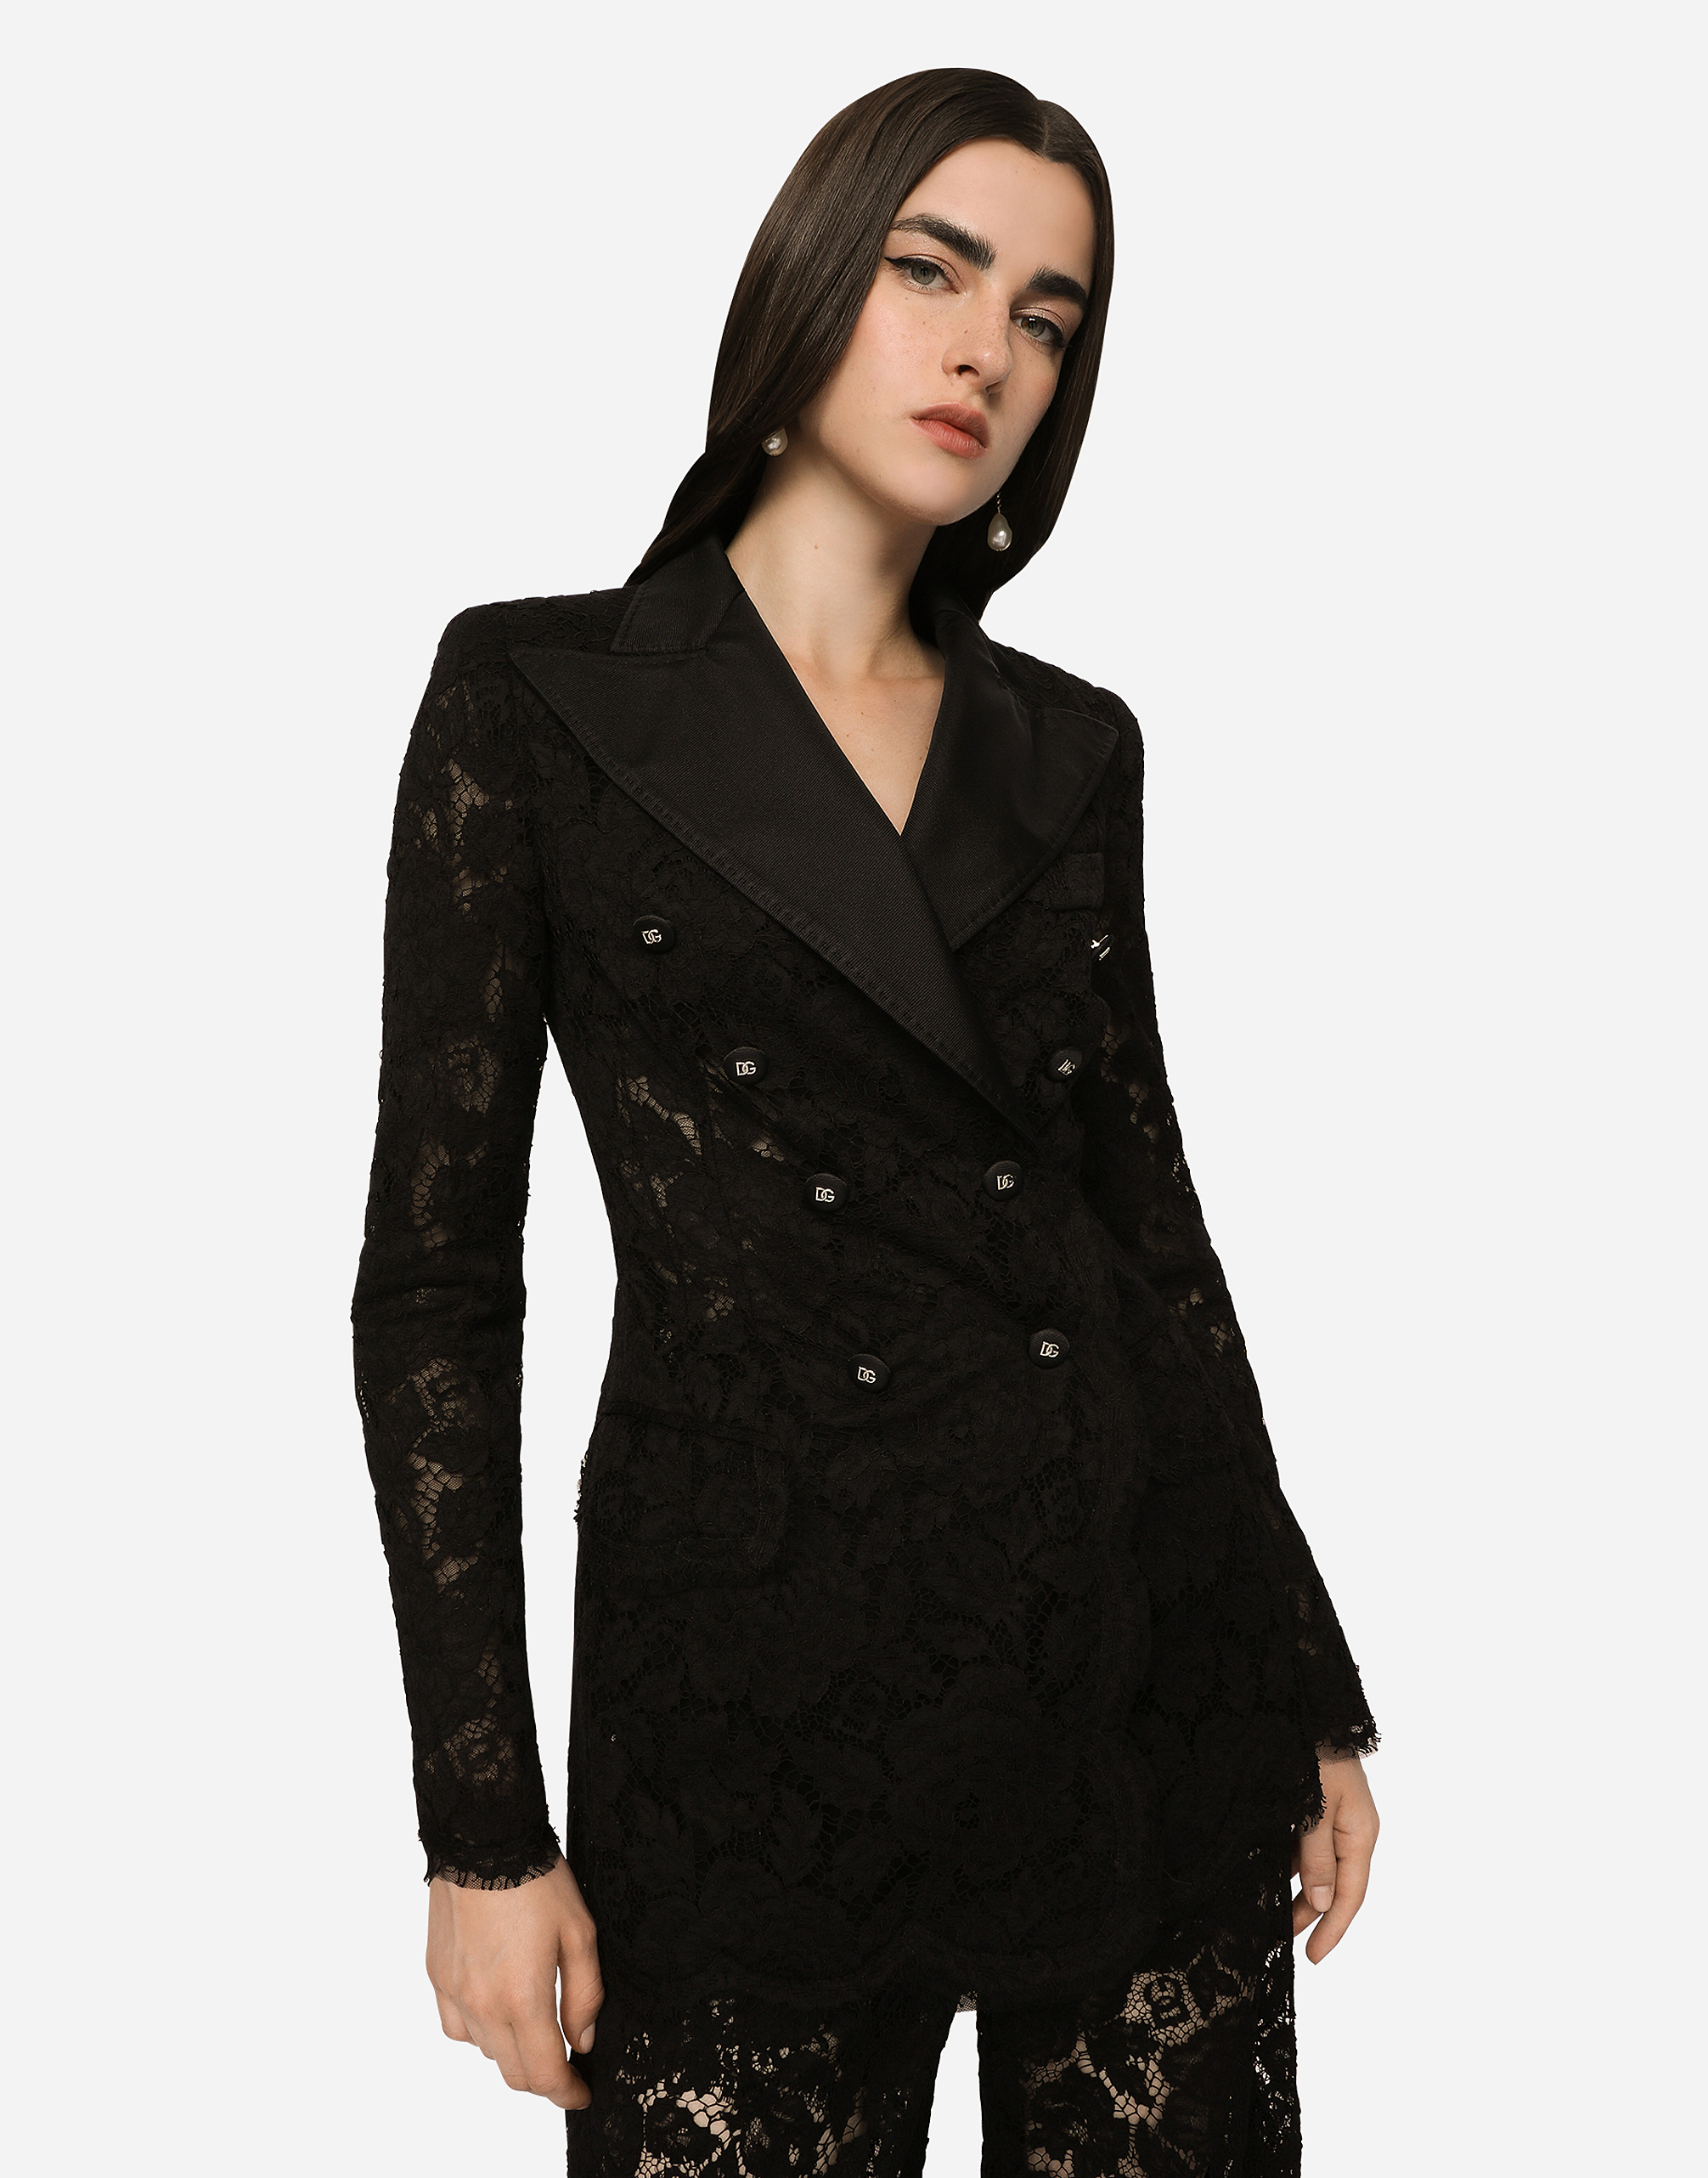 Branded stretch lace Turlington blazer in Black